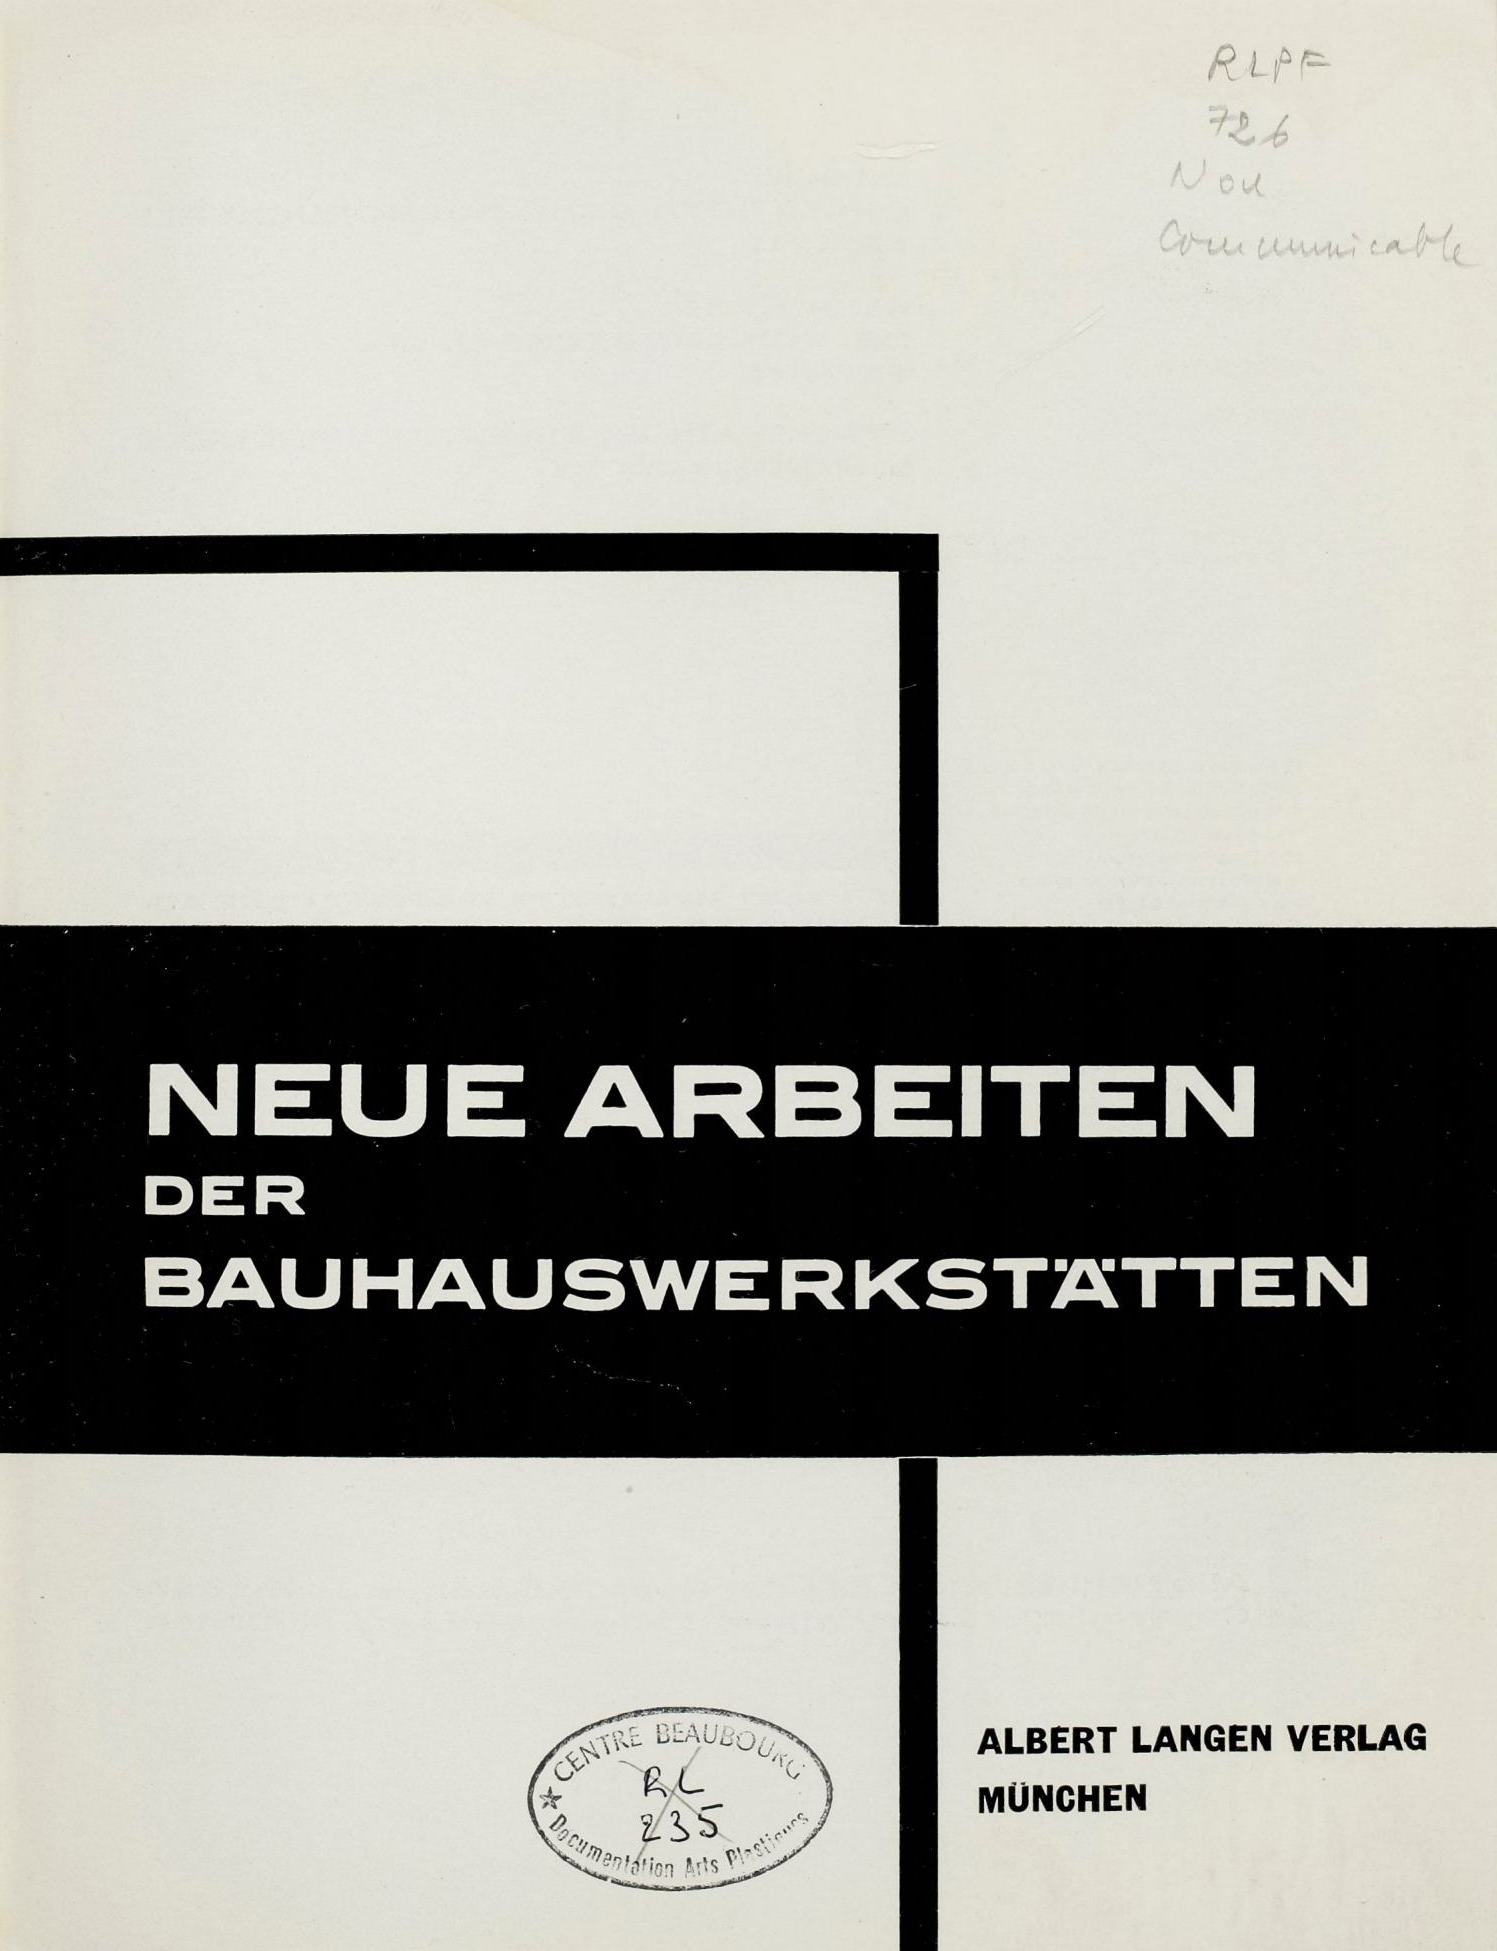 Neue Arbeiten der Bauhauswerkstätten. — München : Albert Langen Verlag, 1925. — Bauhausbücher 7